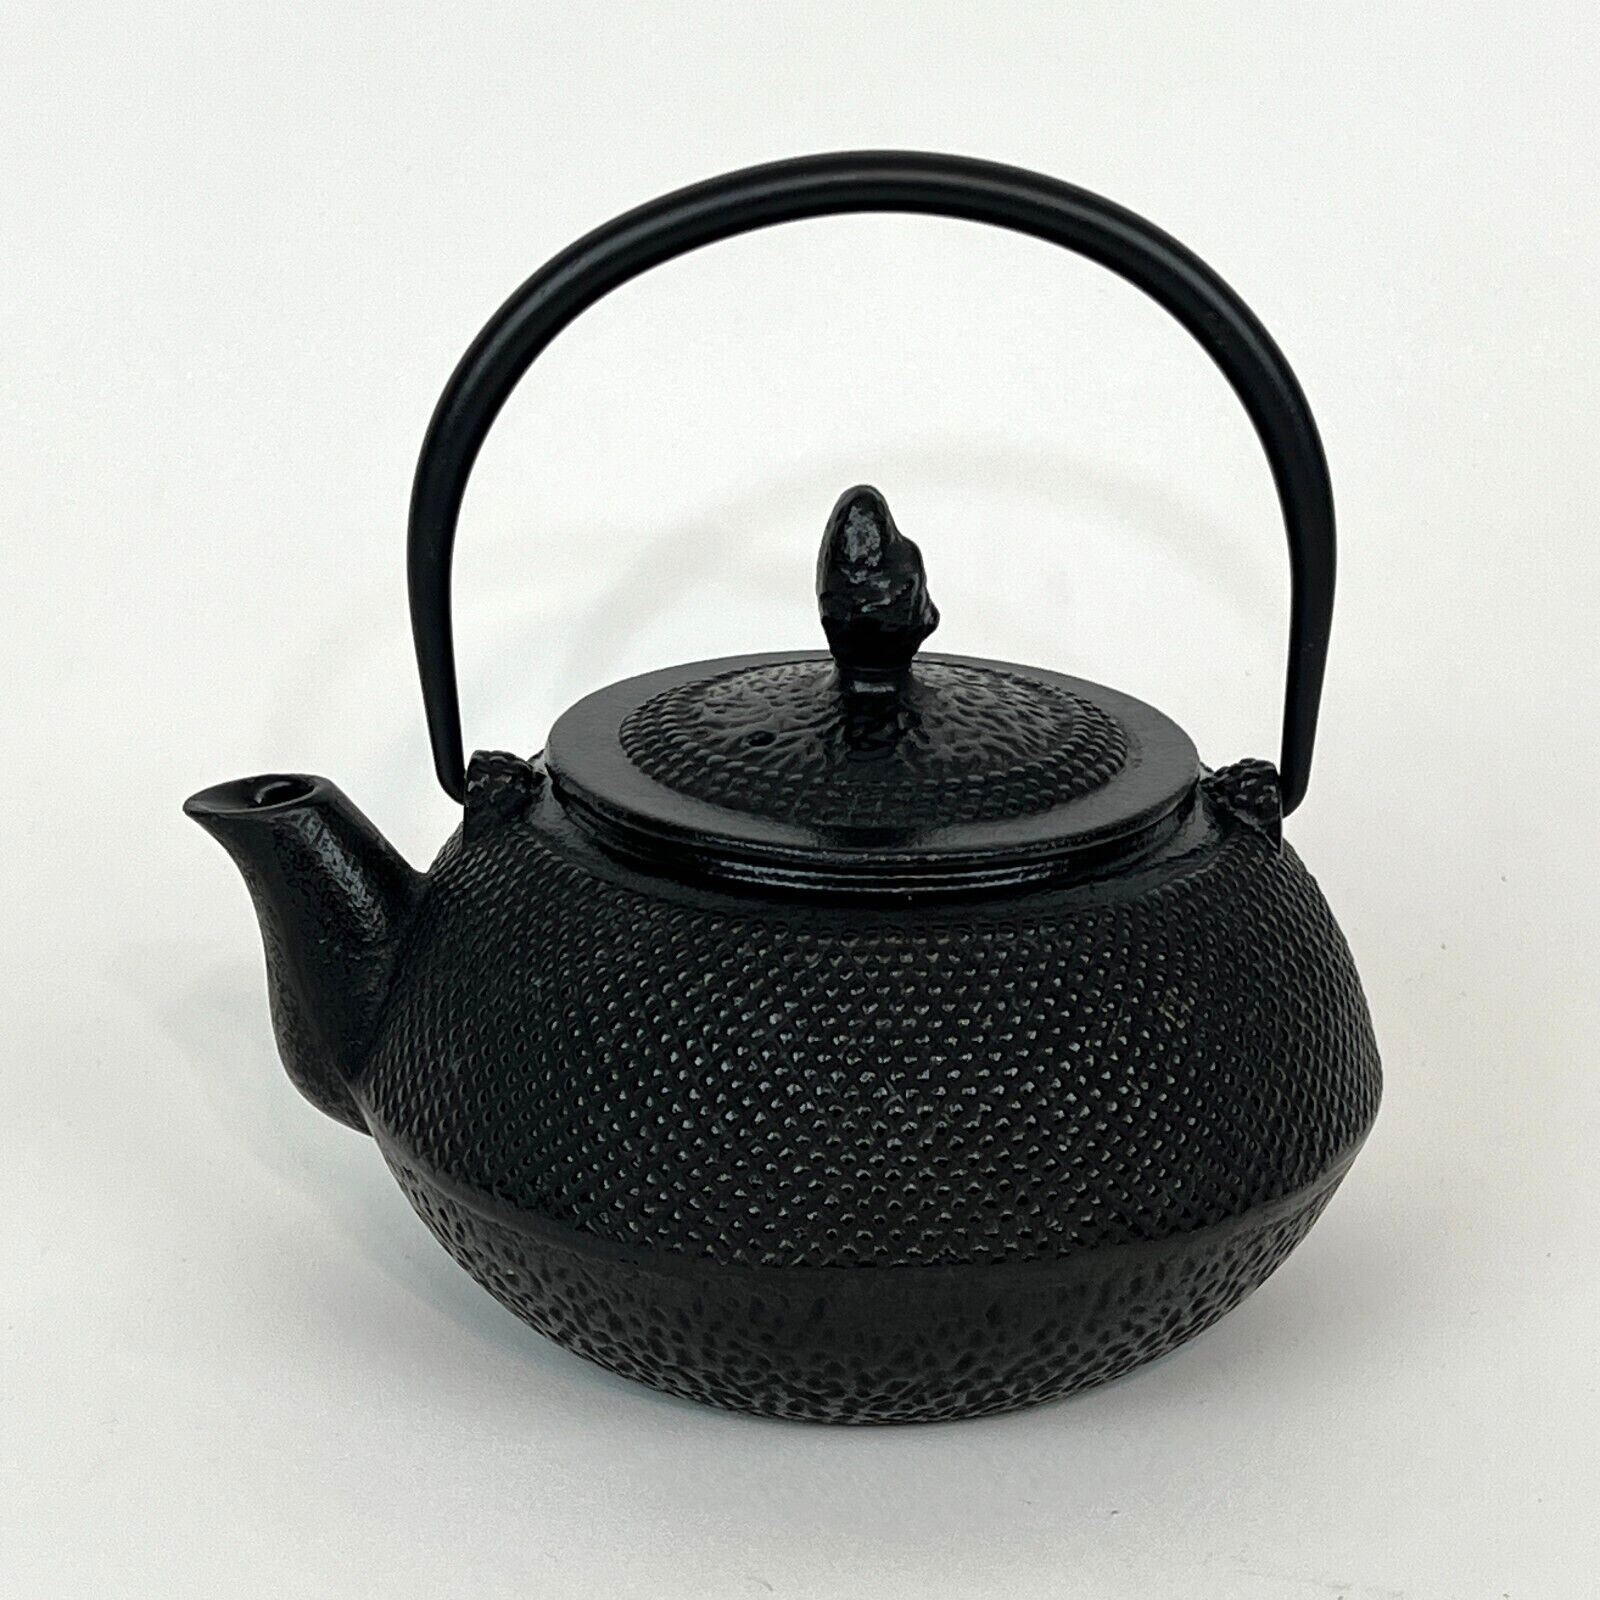 Teavana Hobnail Cast Iron Teapot Kettle Black w/mesh infuser ~ SHIPS FREE